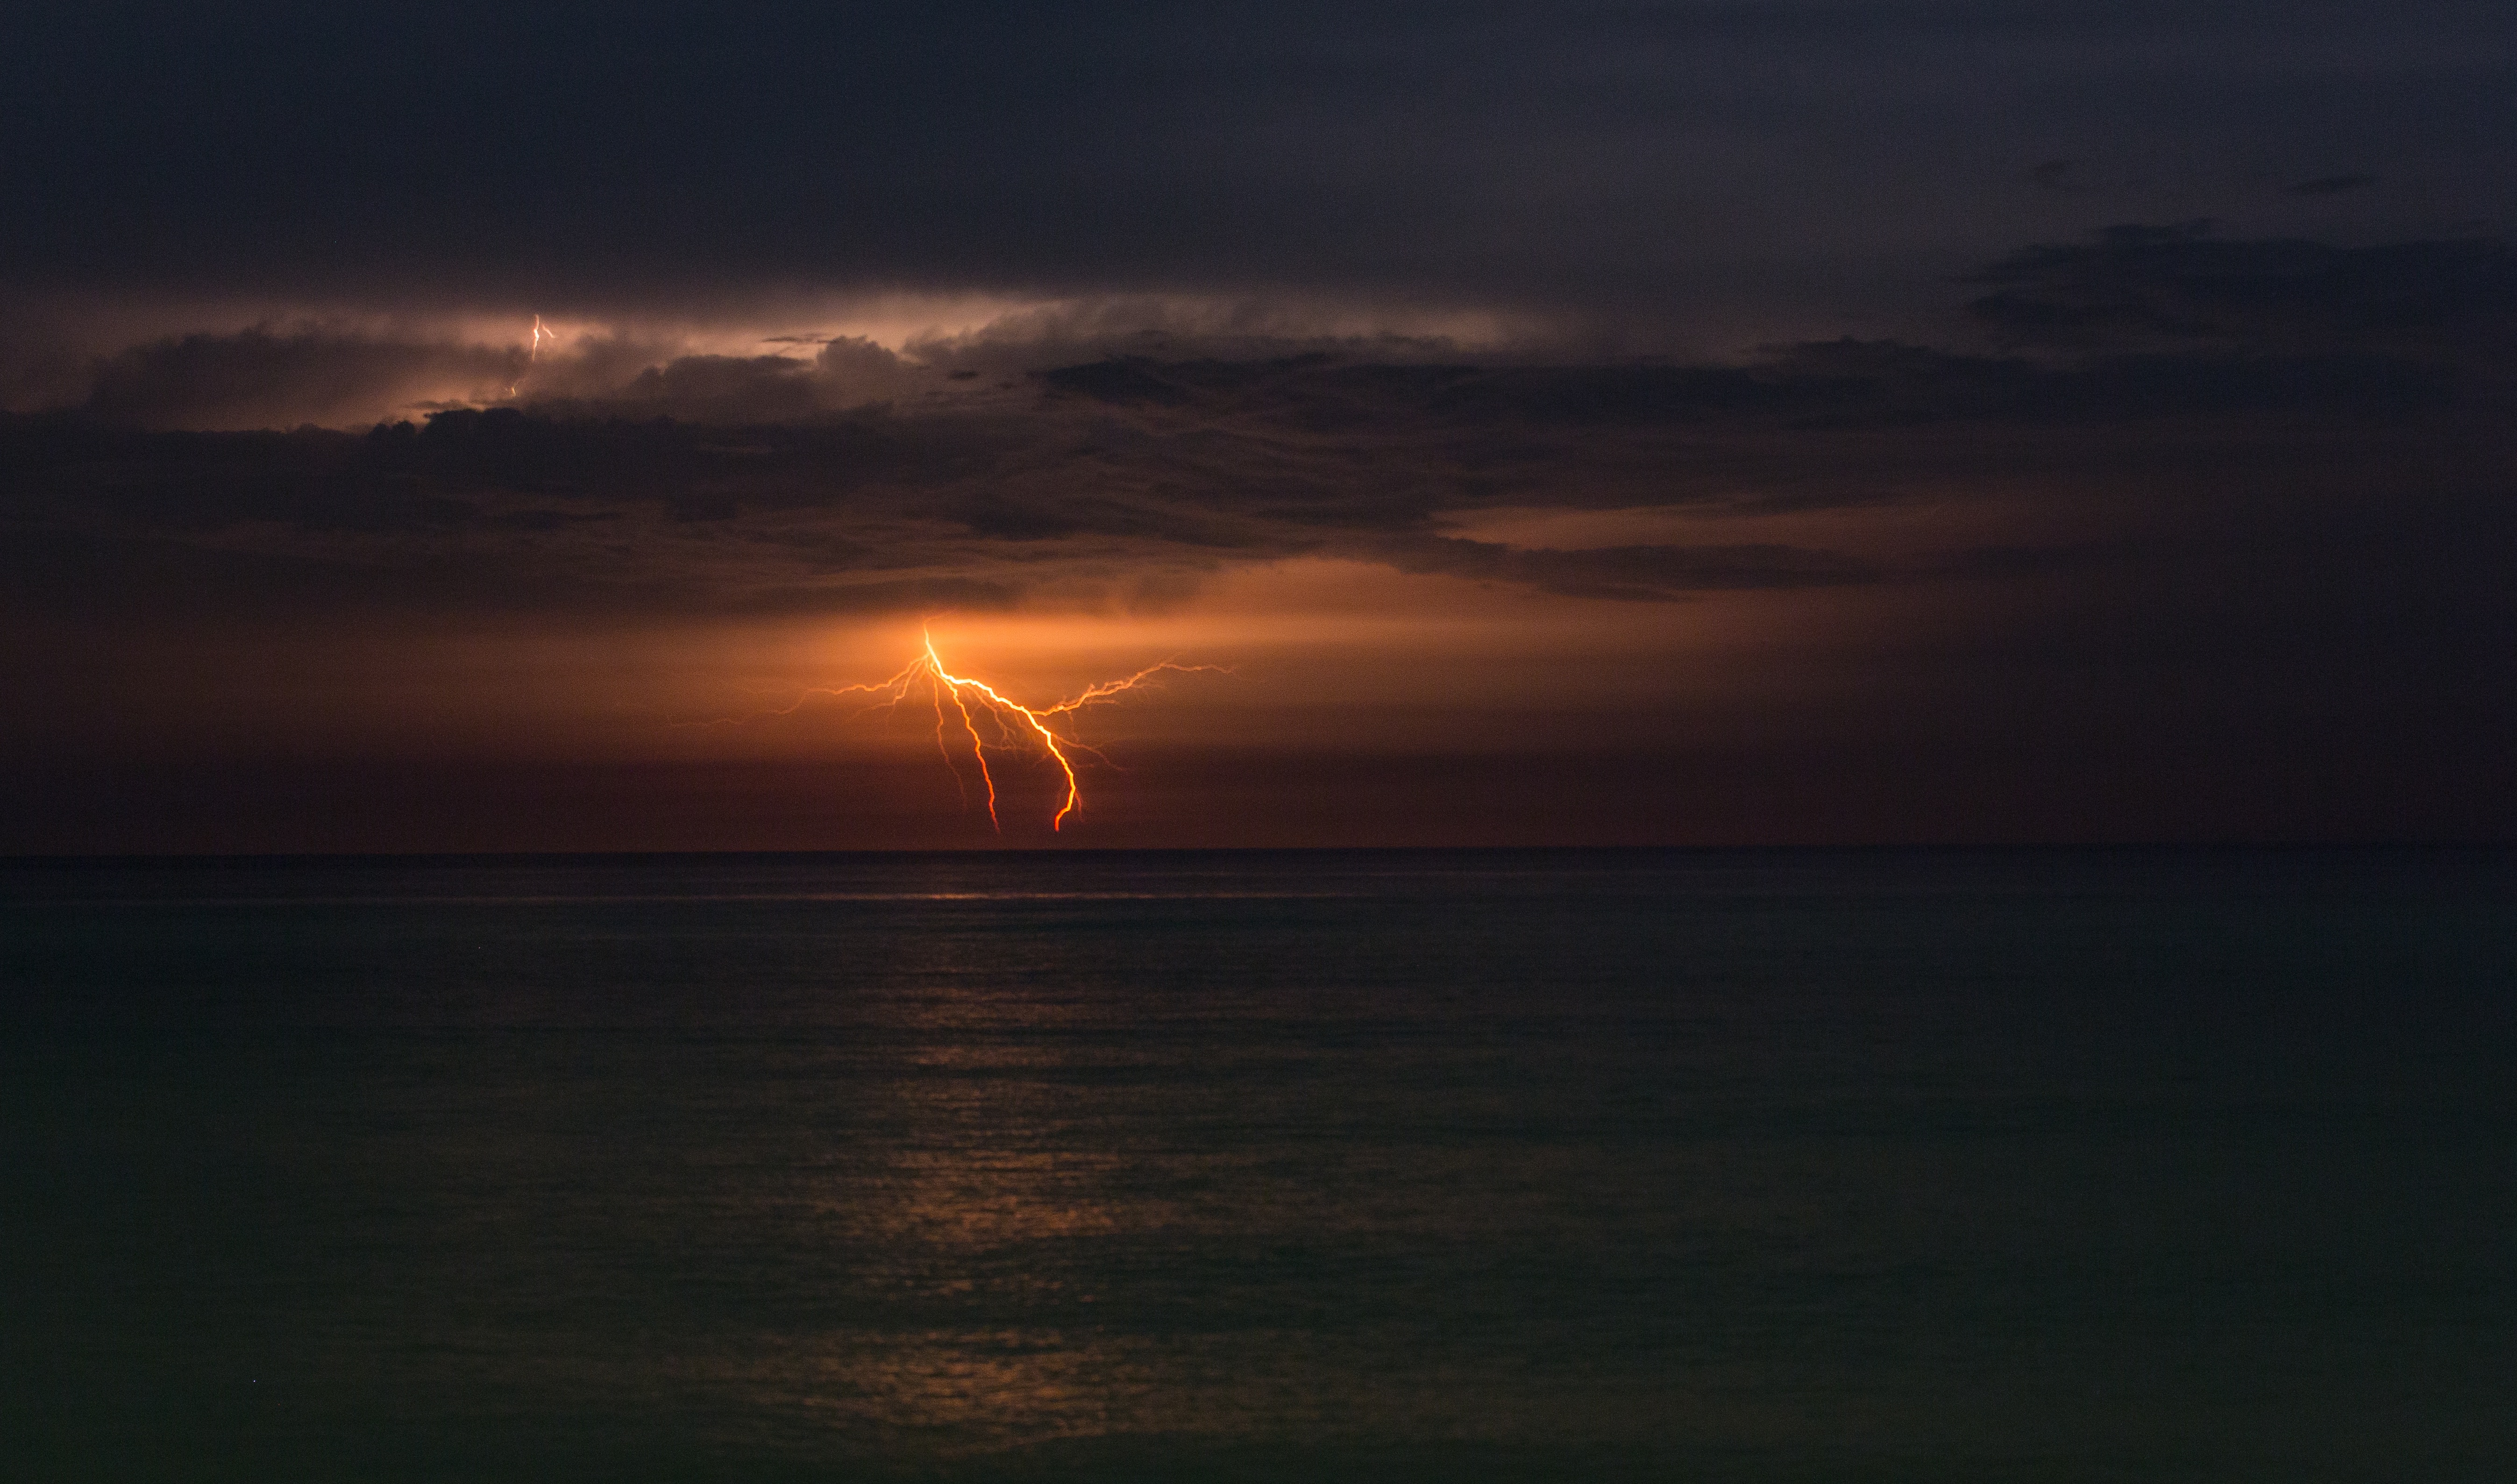 Night lightning over the ocean